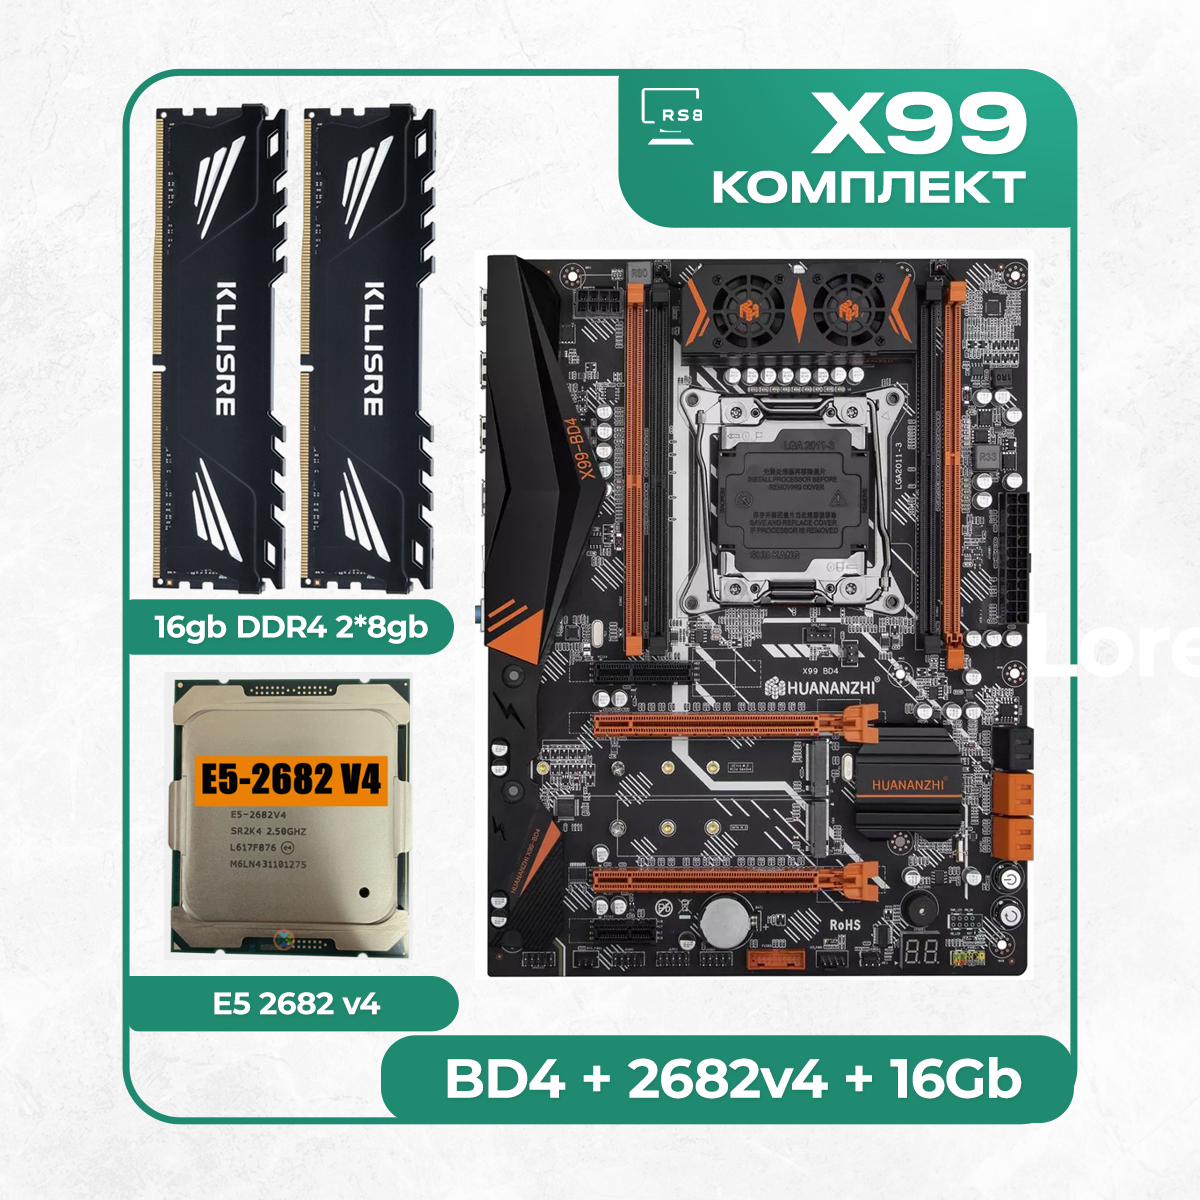 Комплект материнской платы X99: Huananzhi BD4 + Xeon E5 2682v4 + DDR4 16Гб 2666Мгц Kllisre